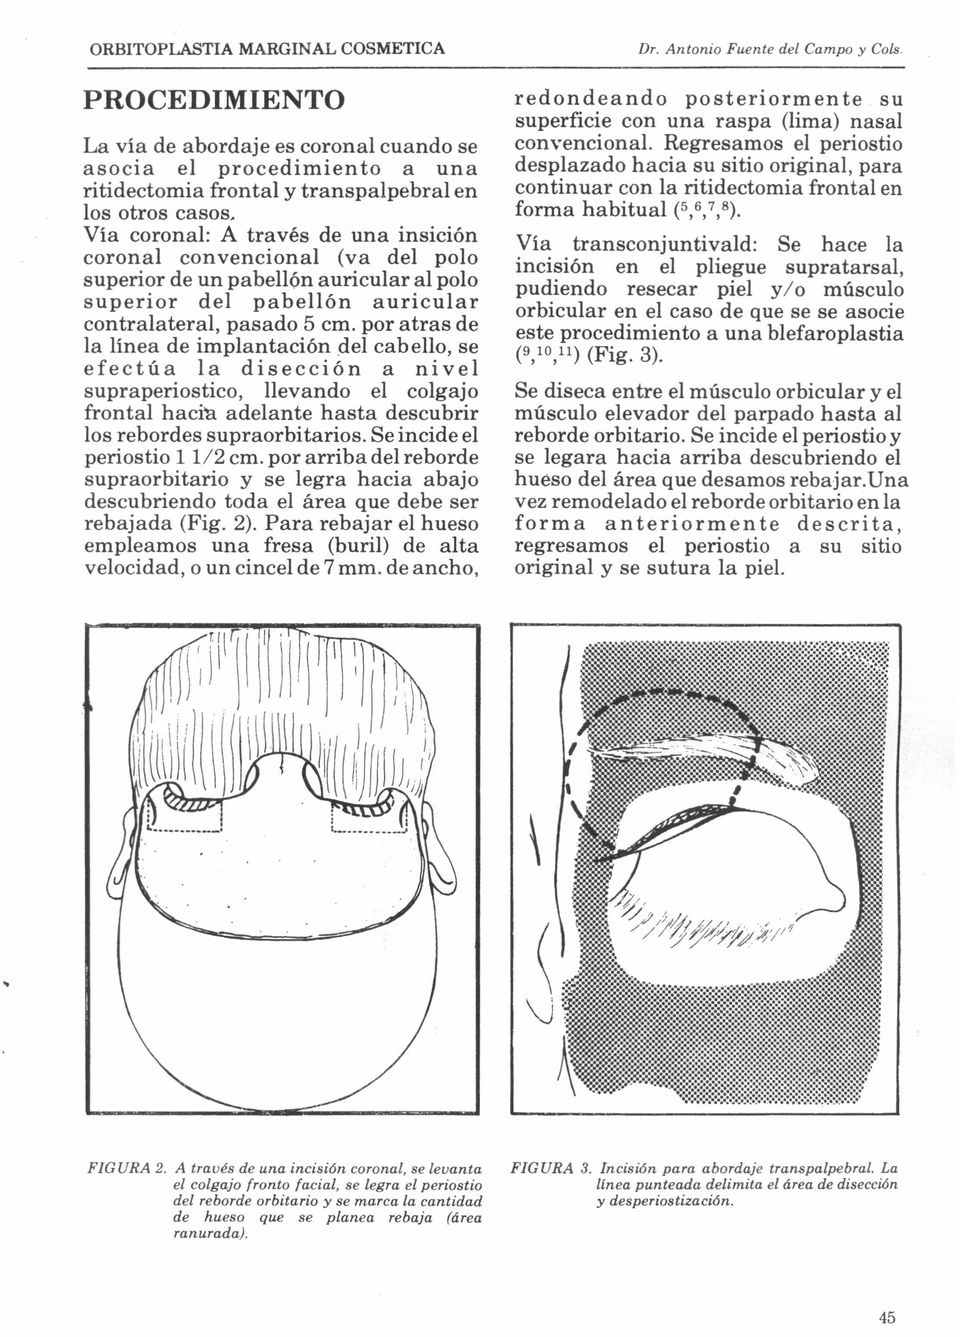 Vía coronal: A través de una insición coronal convencional (va del polo superior de un pabellón auricular al polo superior del pabellón auricular contralateral, pasado 5 cm.